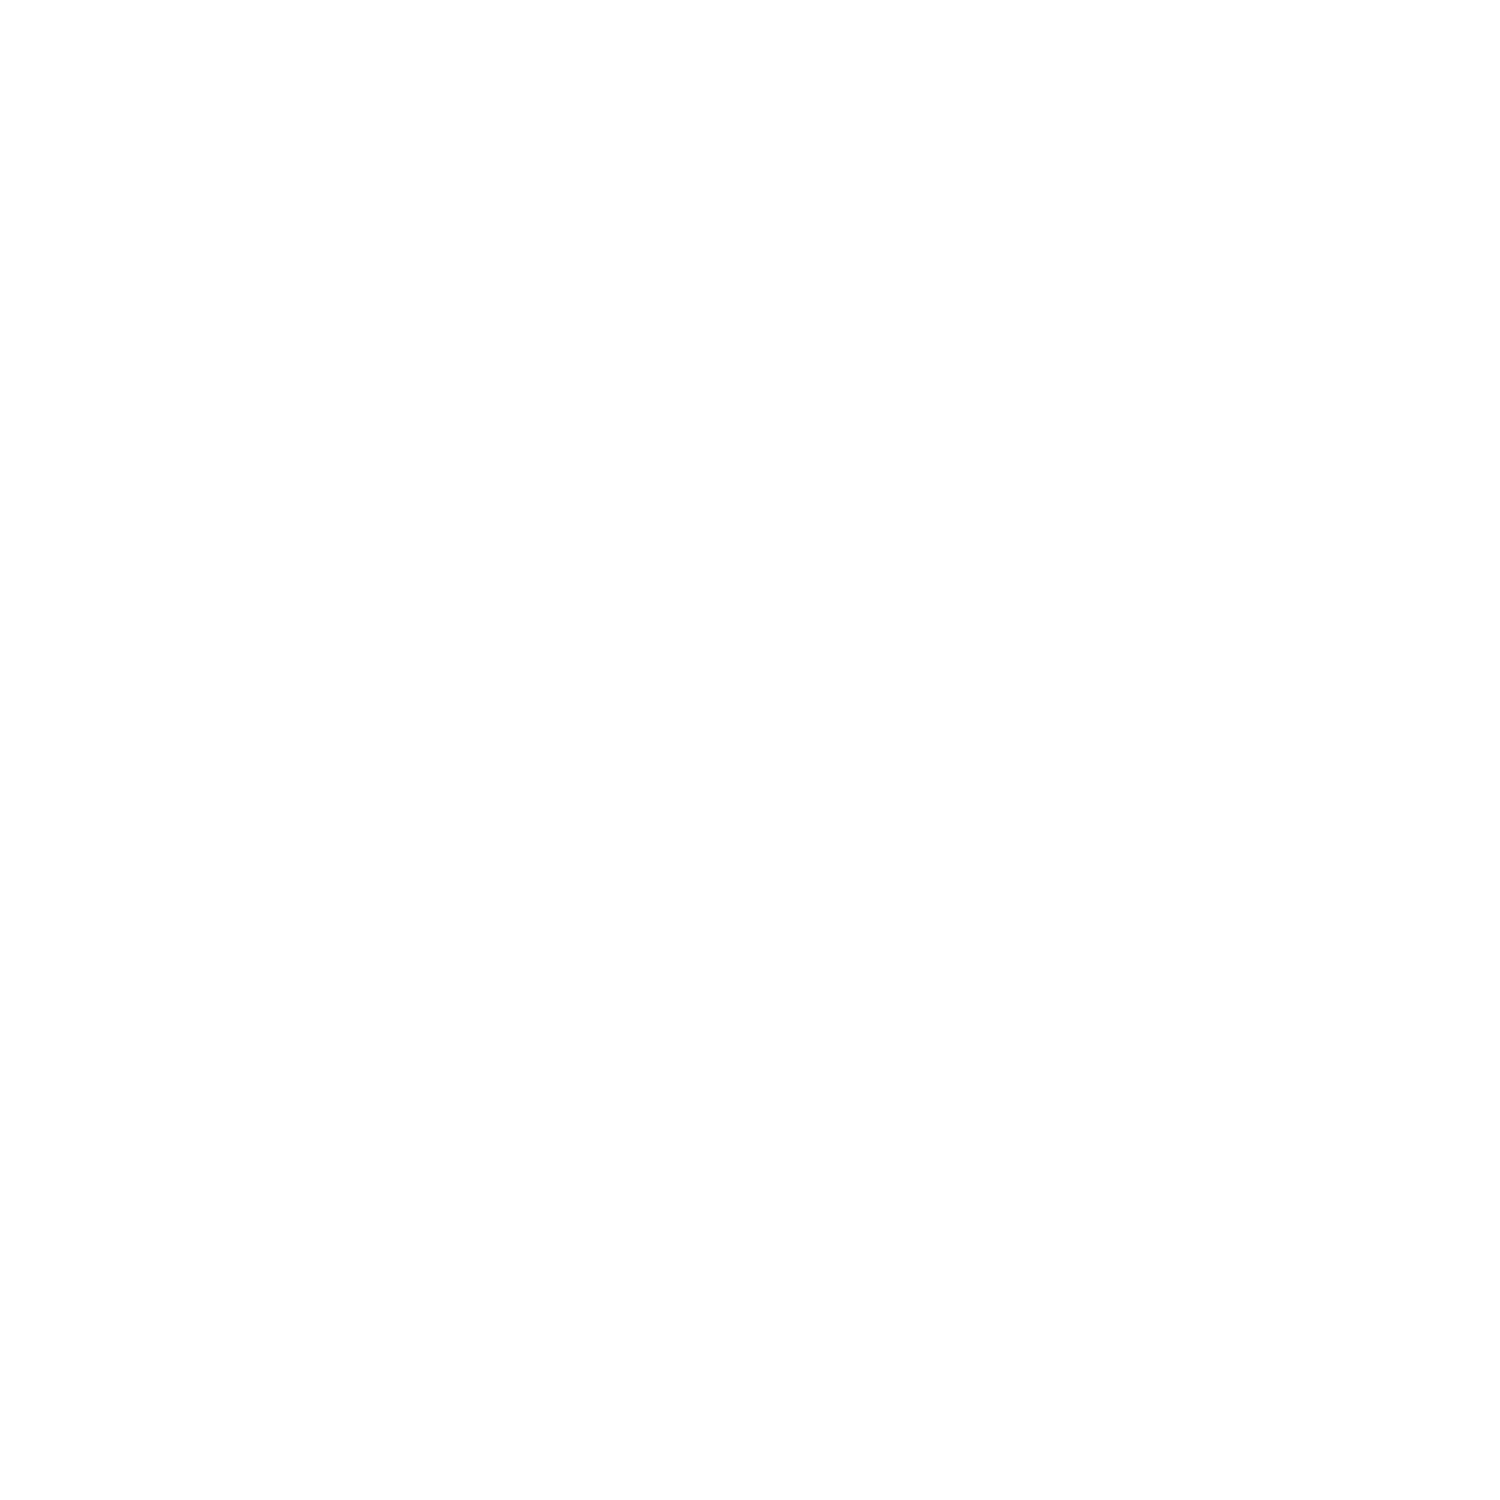 Logo design for Onérique